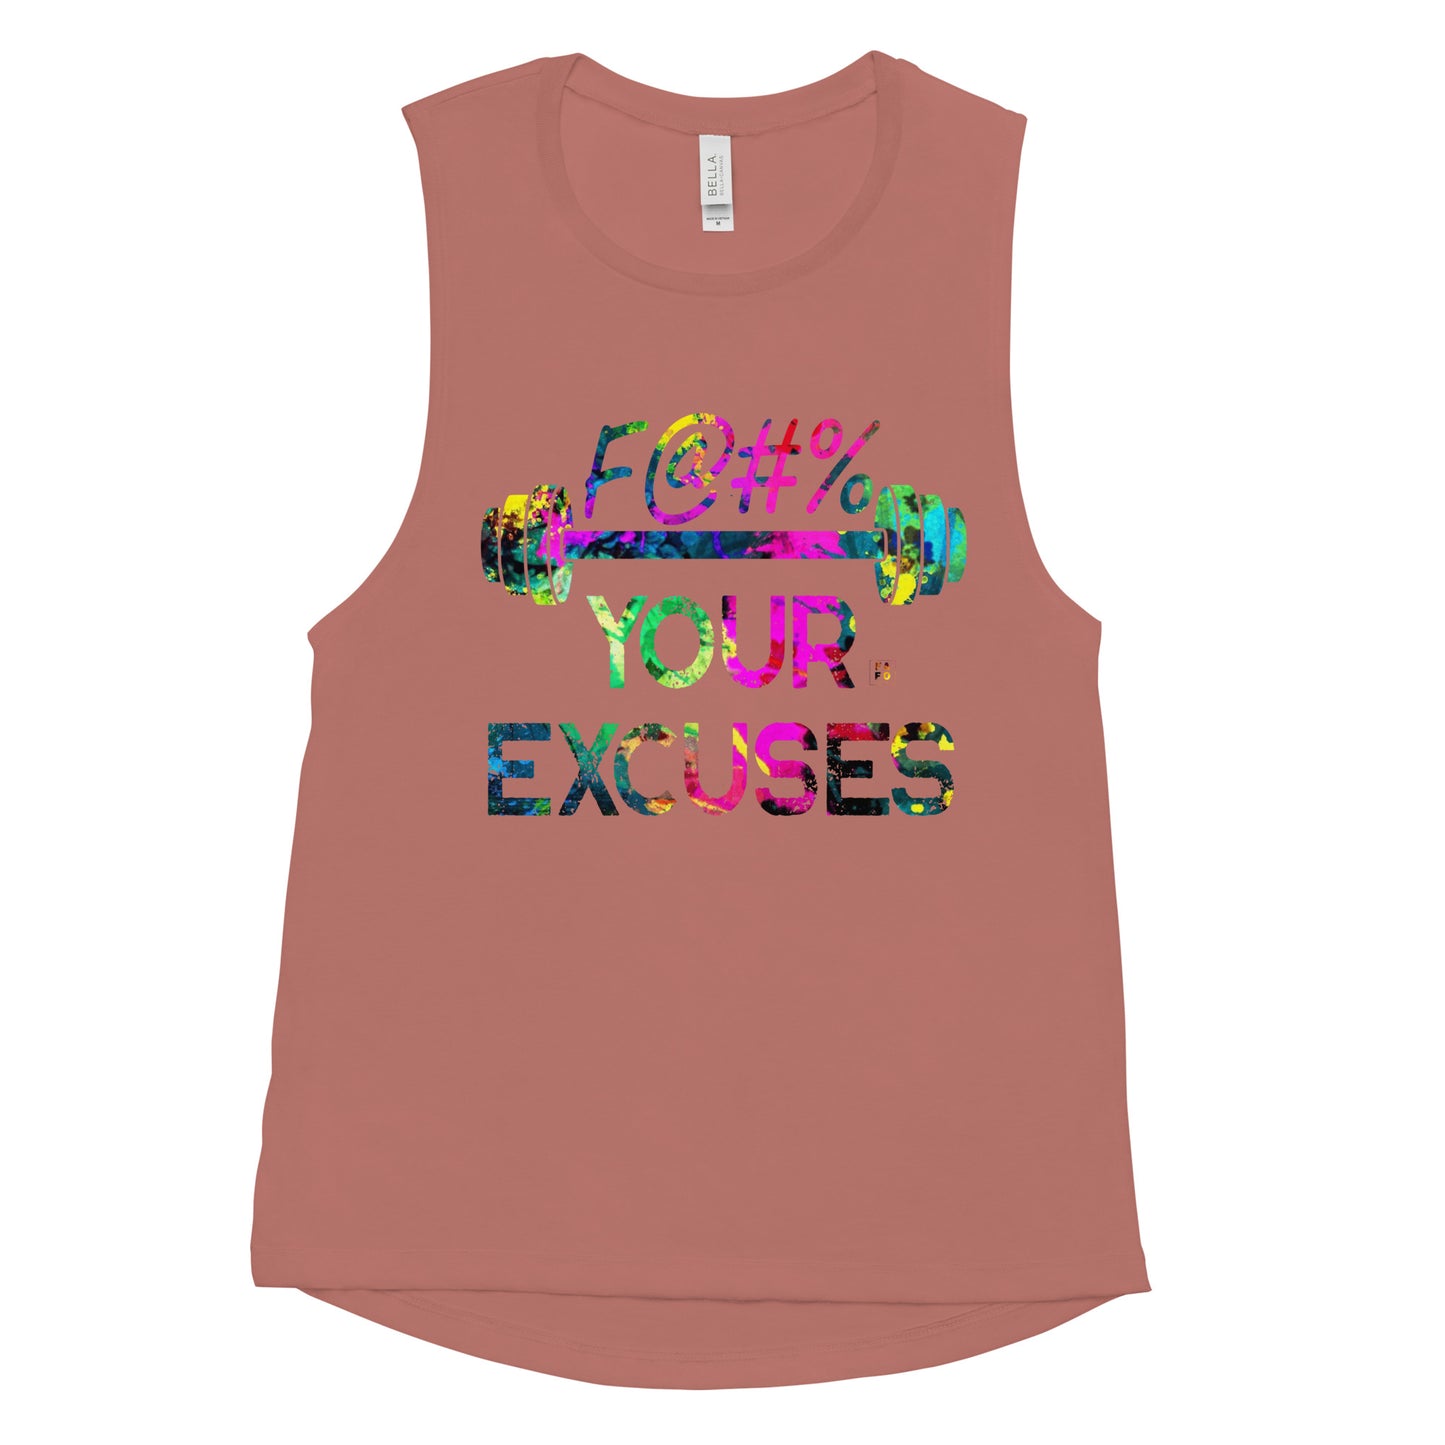 Bella Muscle Tank - F*k Your Excuses - FAFO Sportswear